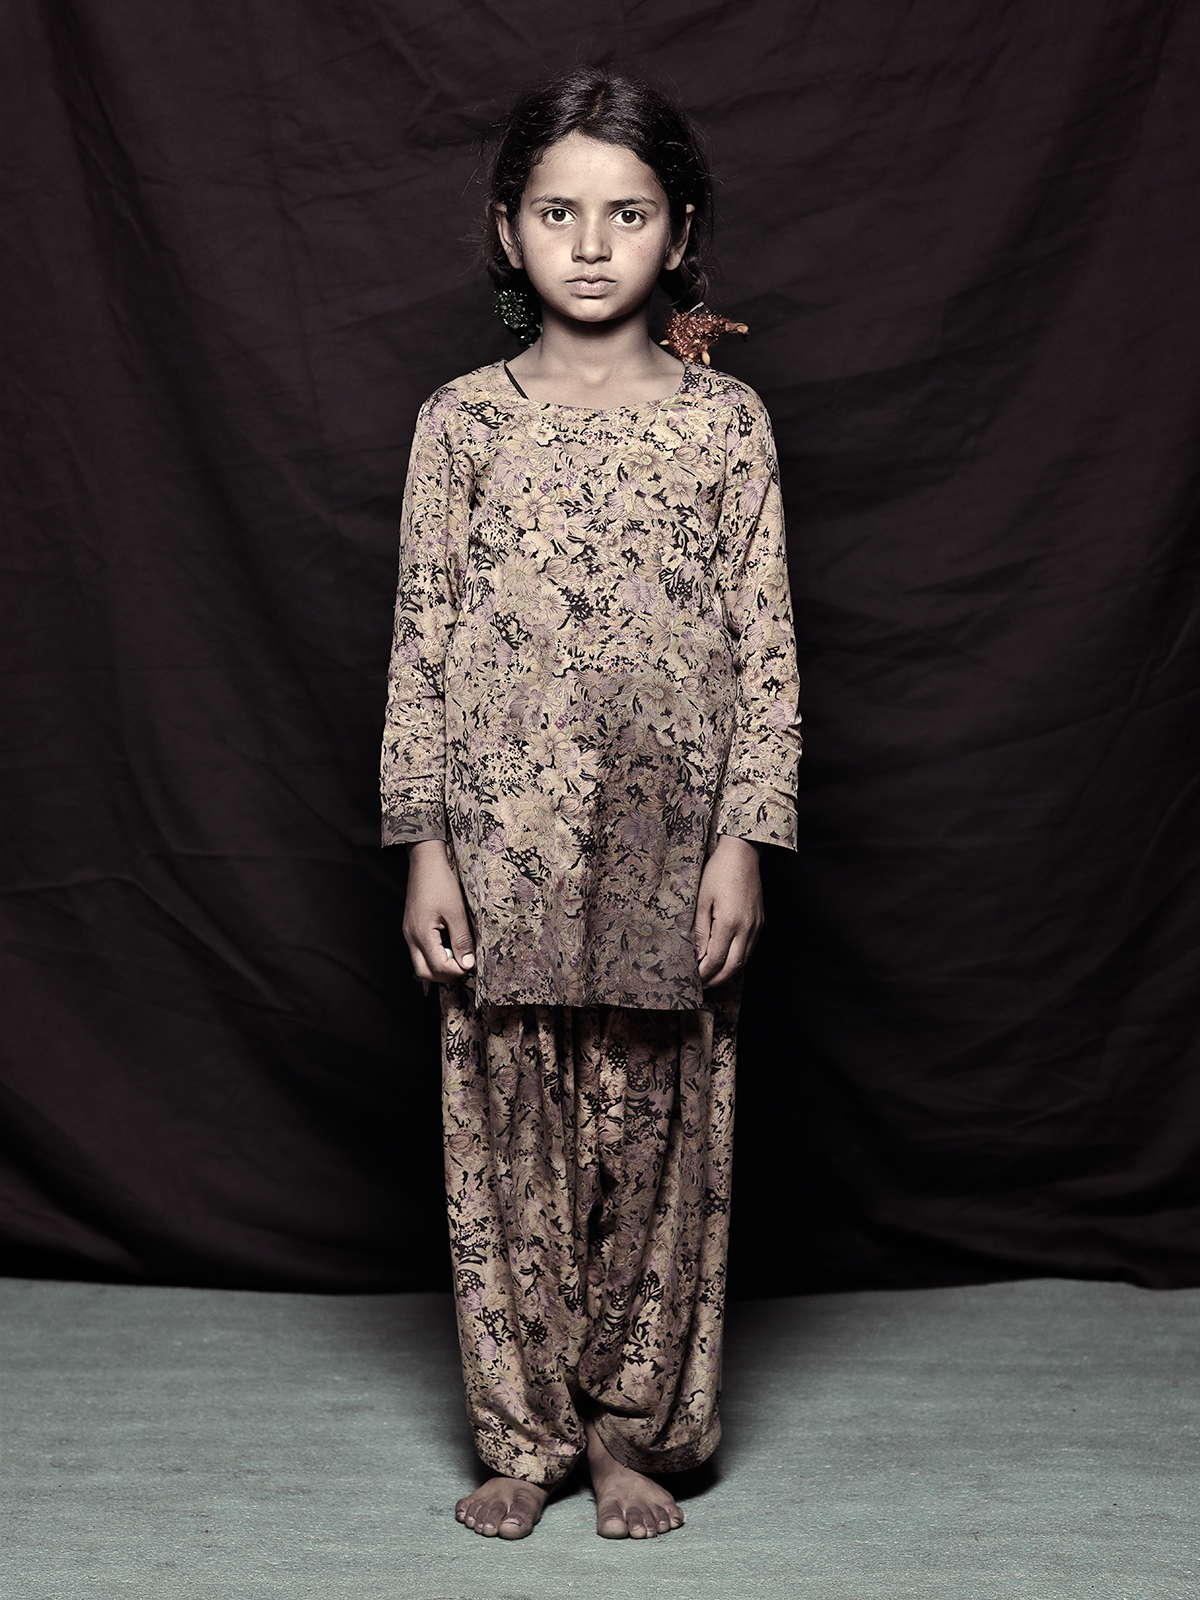 Heena Shah, 9, D-camp, 2013